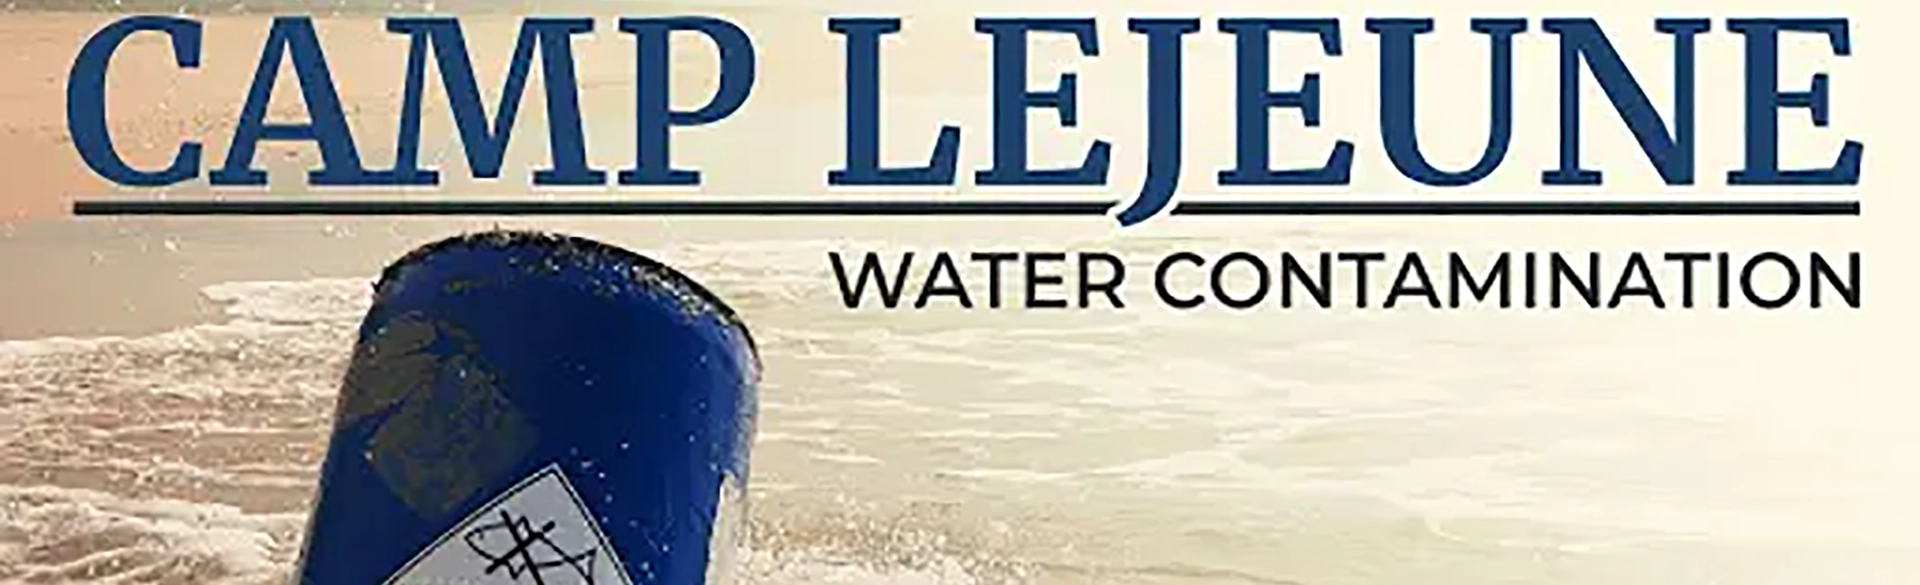 Camp Lejeune Water Contamination and Scleroderma